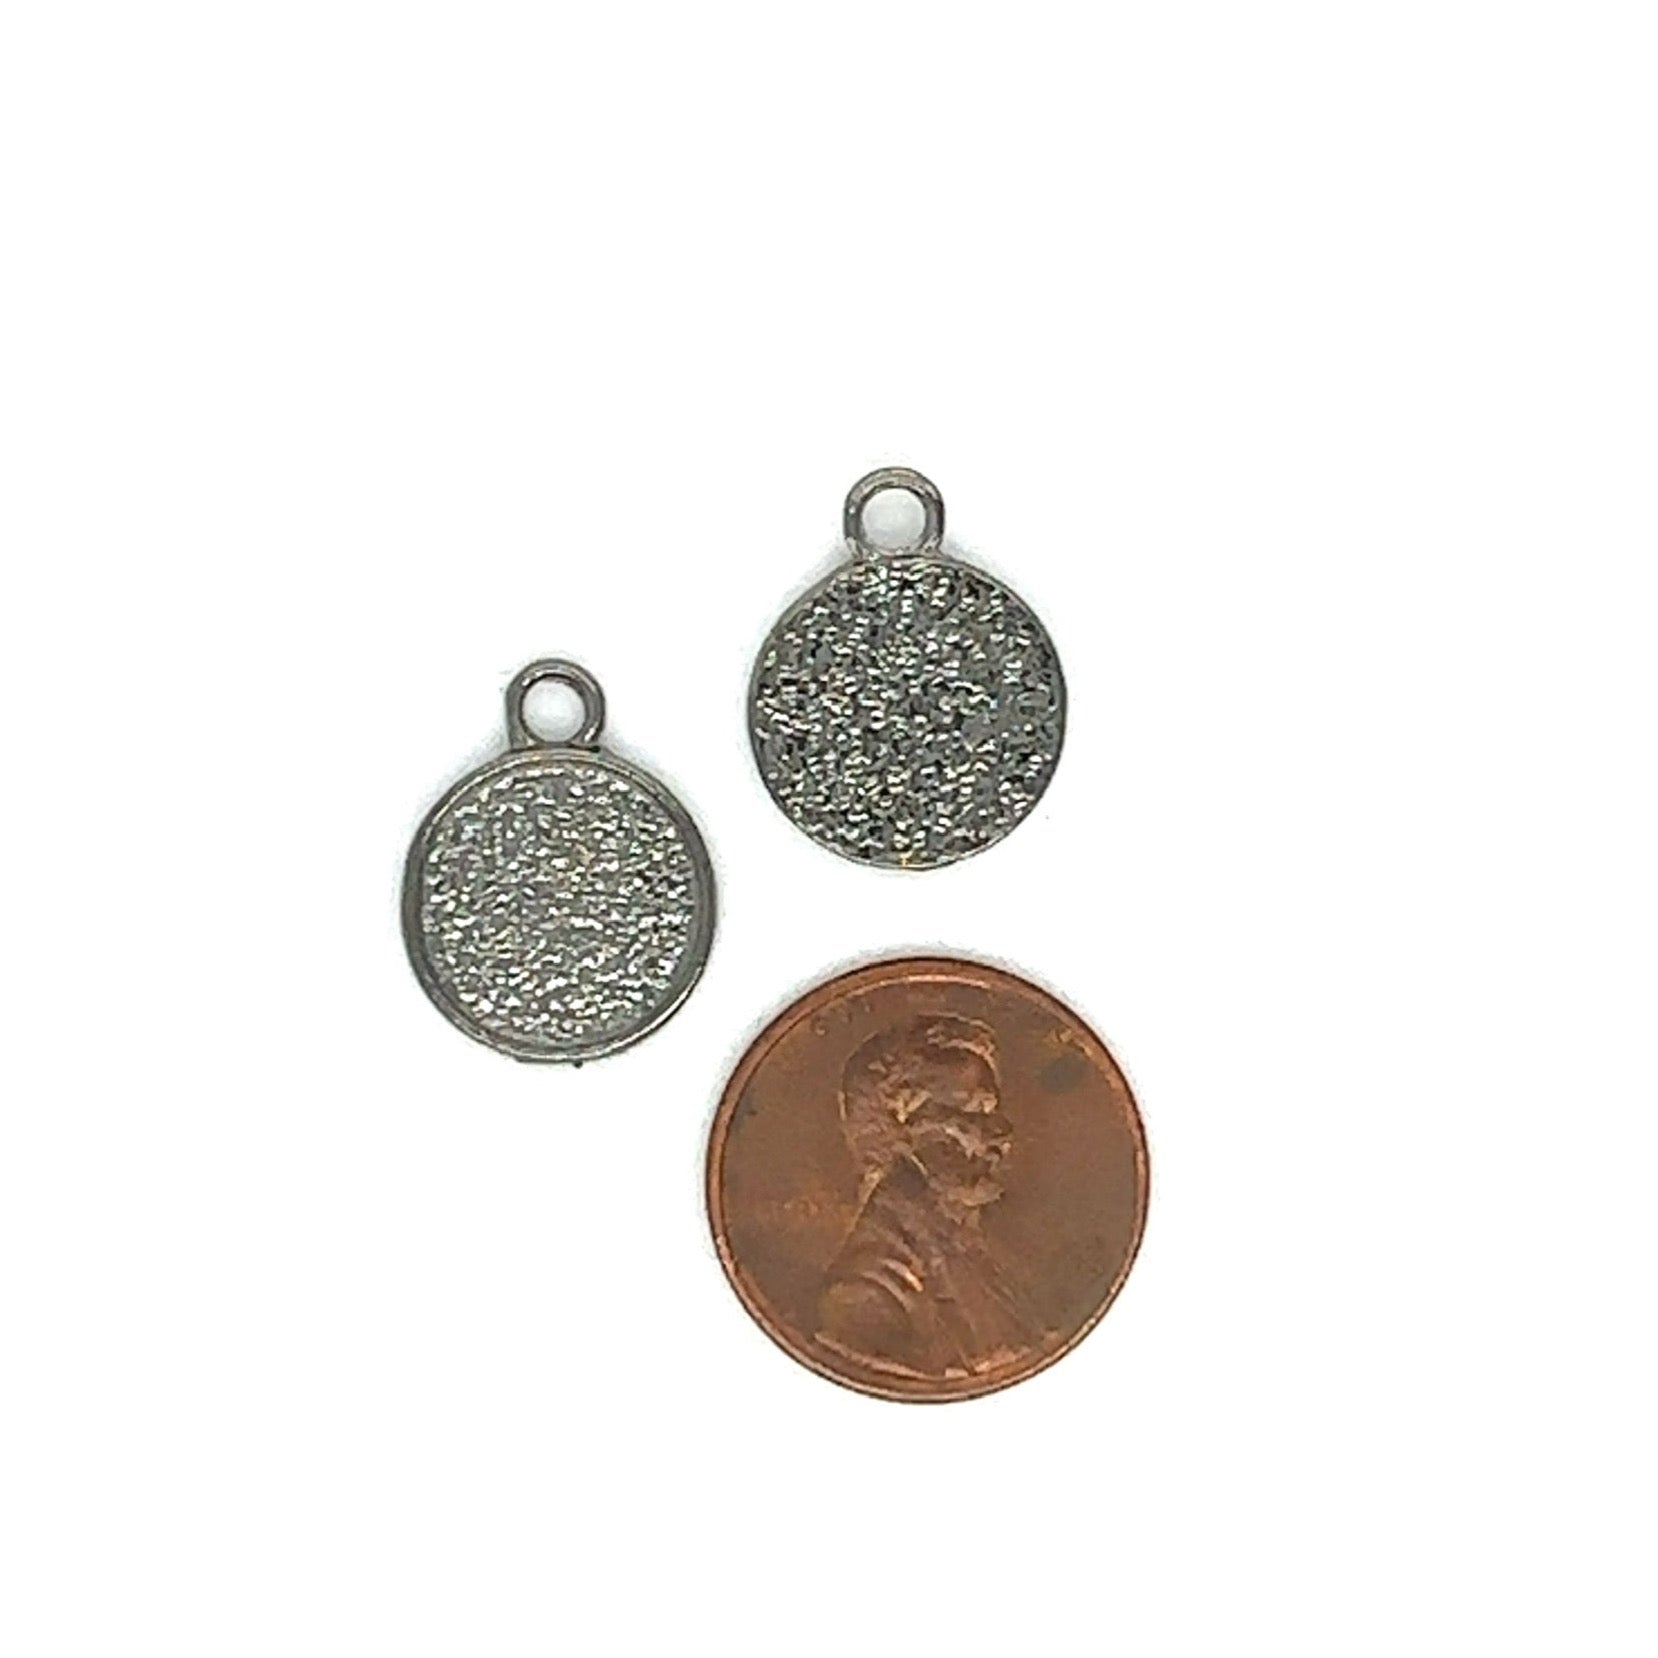 12mm small round jewelry making supplies charm gunmetal